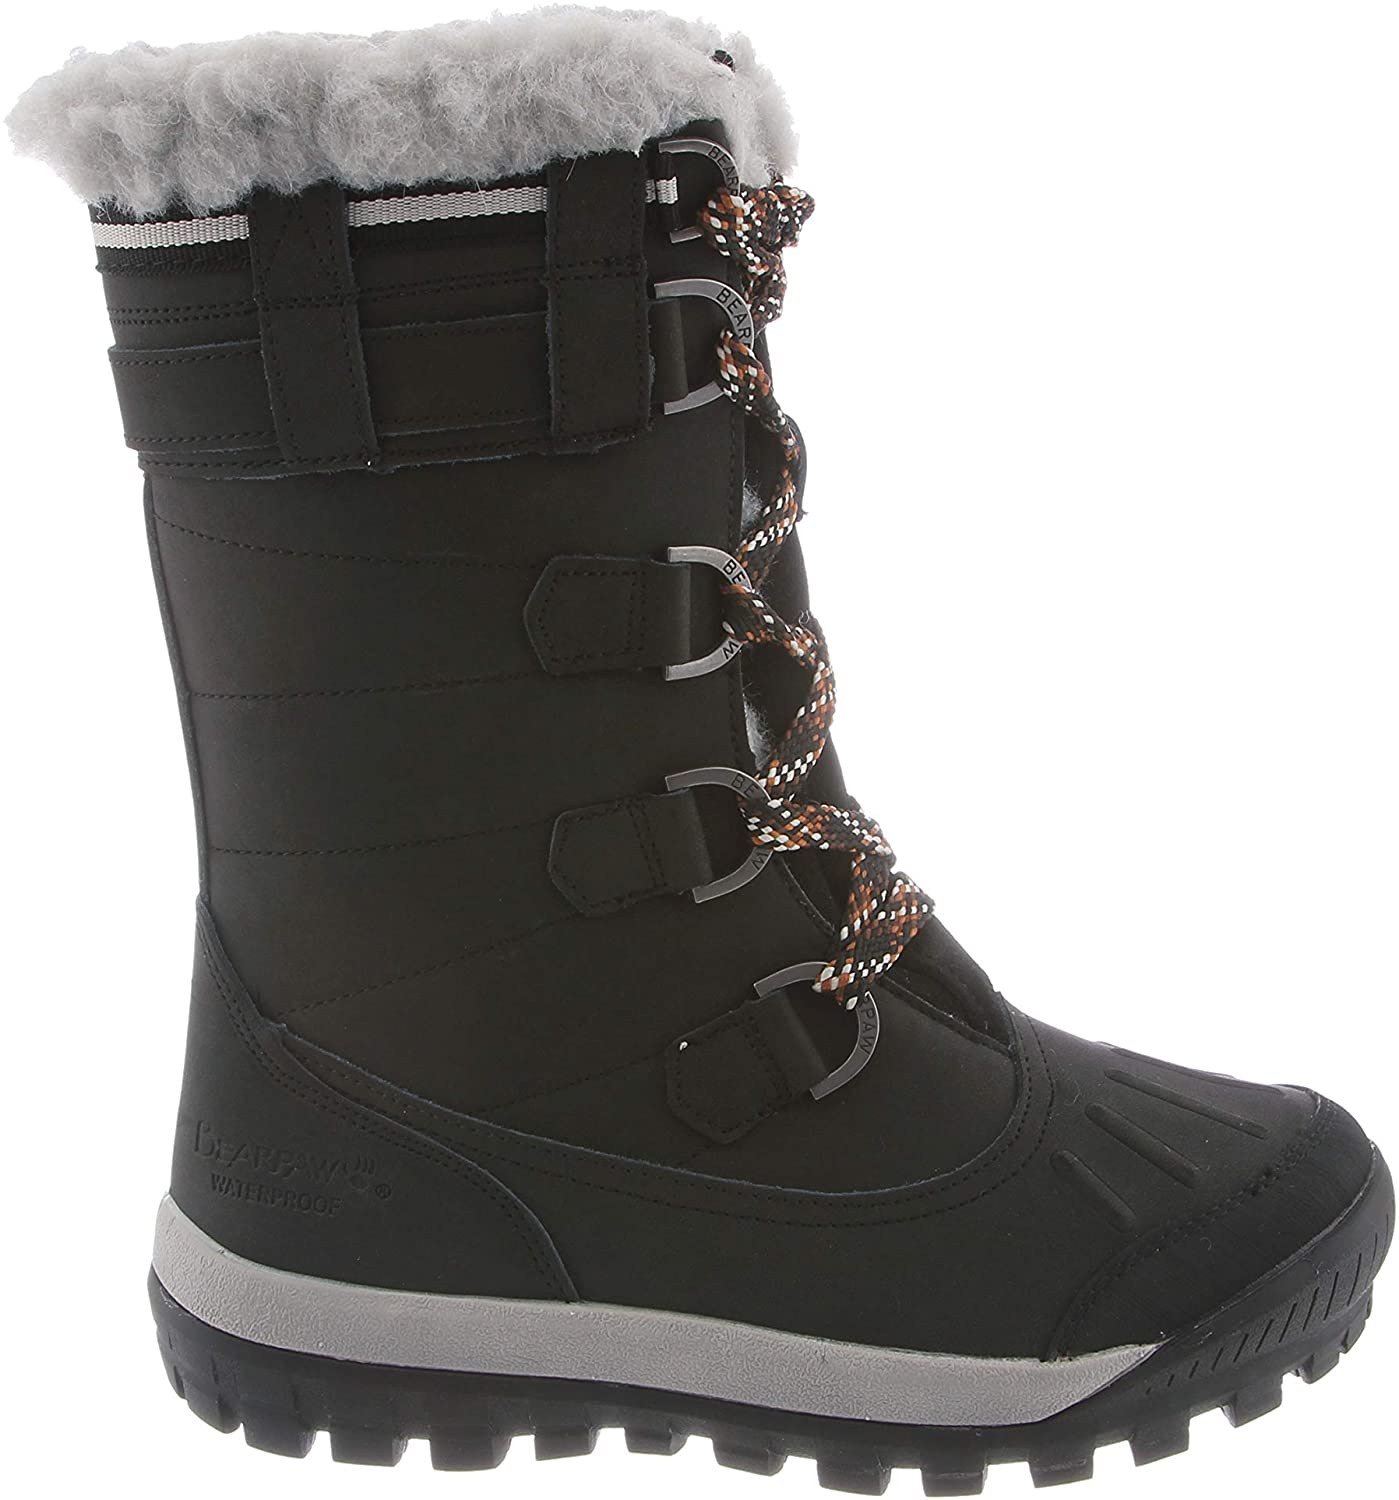 BEARPAW Women's Desdemona Snow Boot, Black, Size 5.0 | eBay